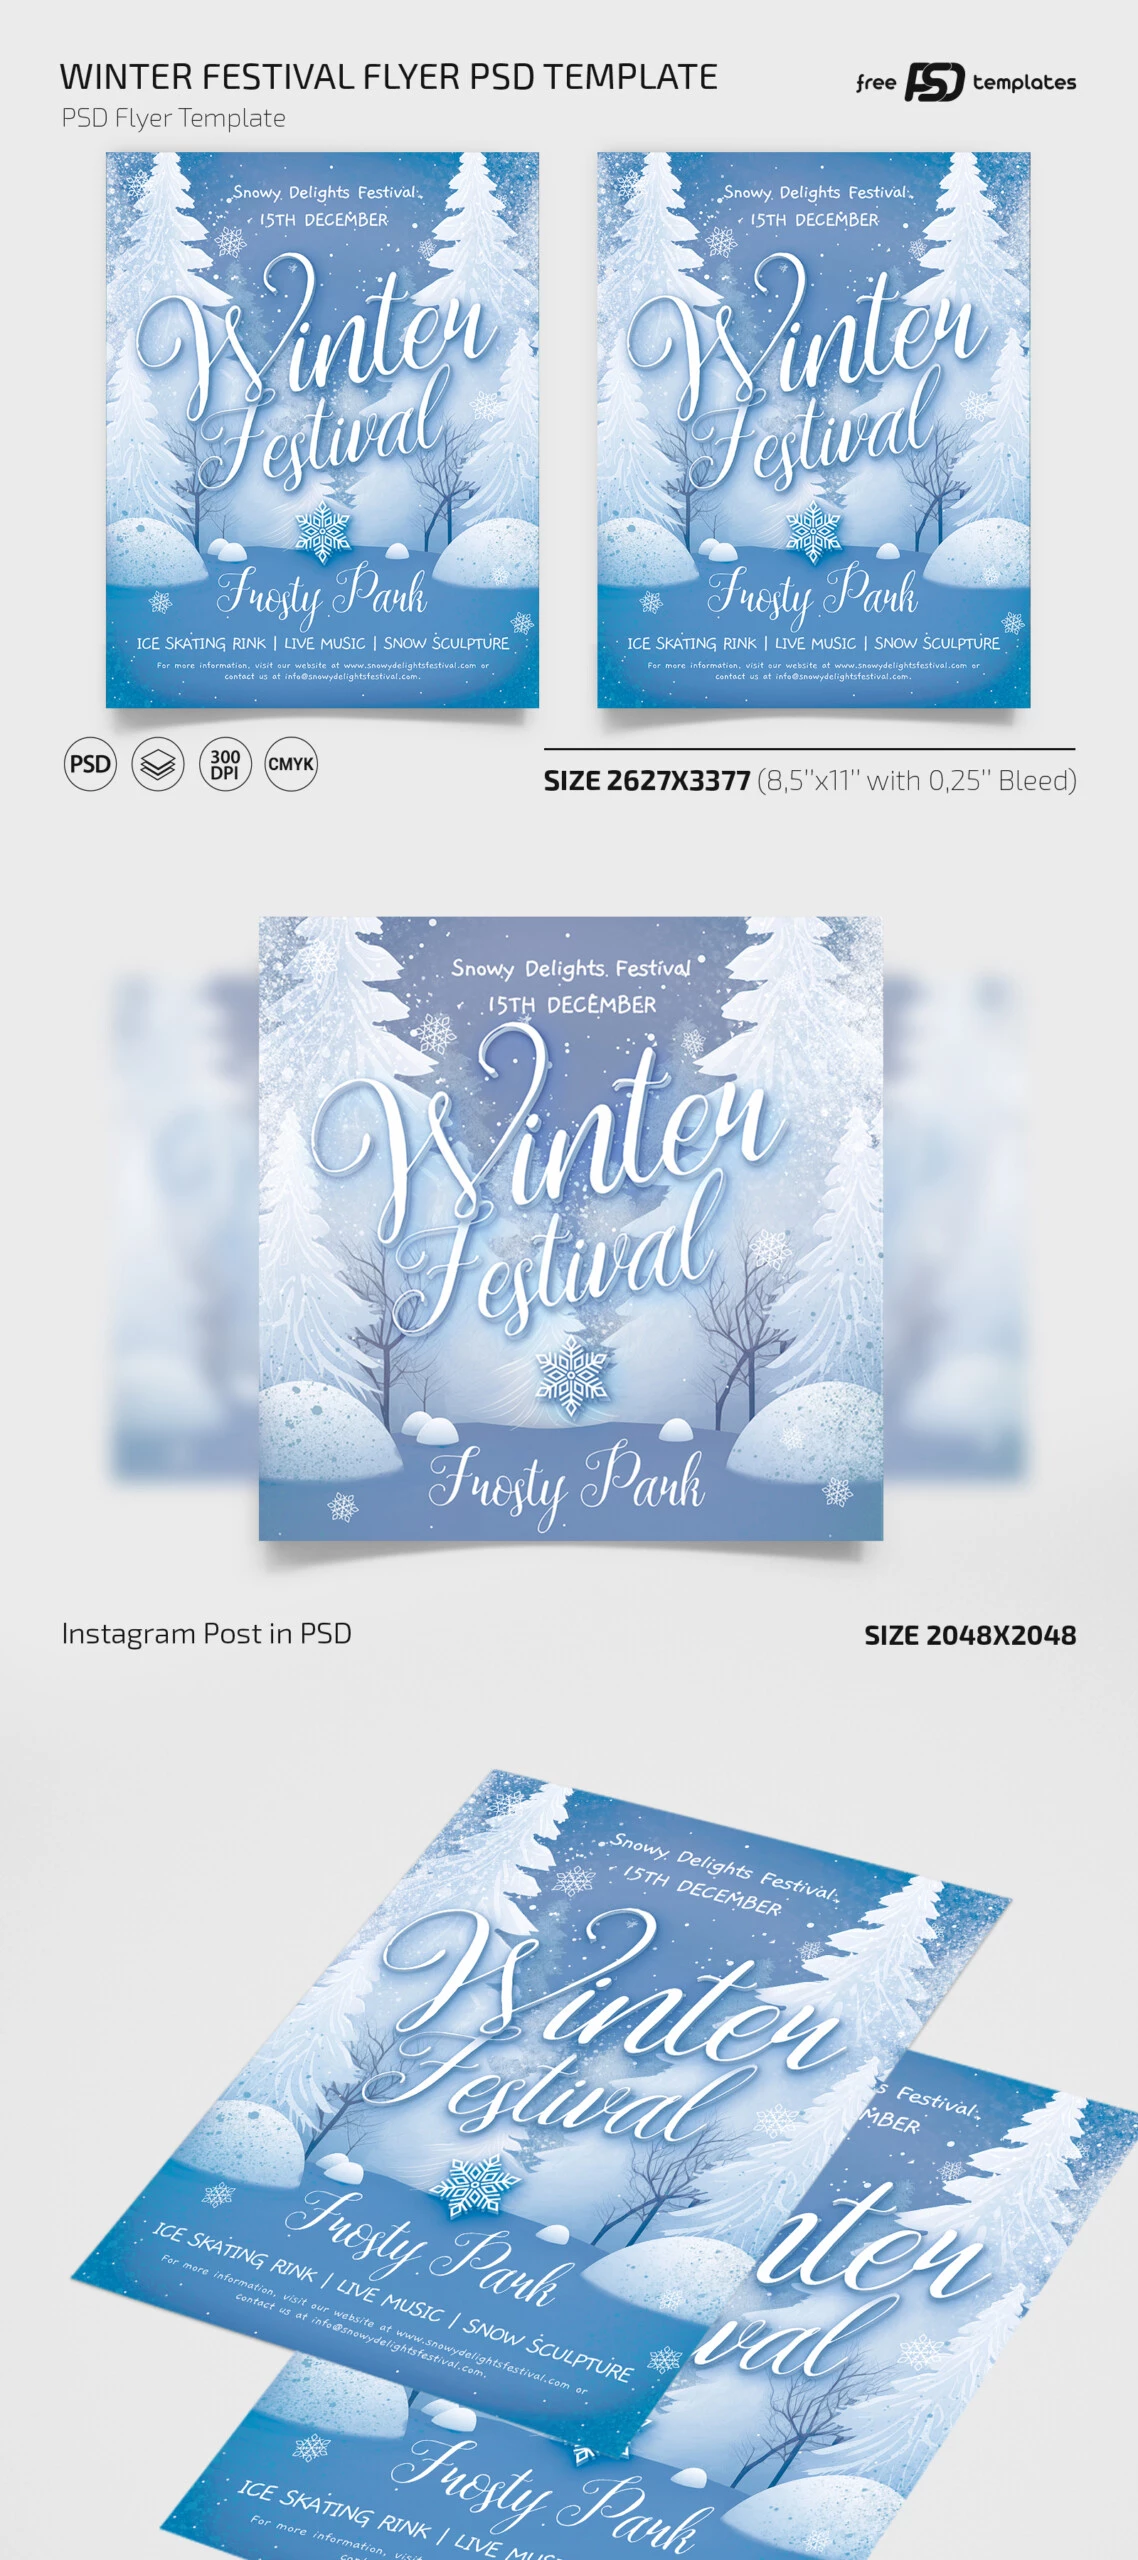 Free Winter Festival Flyer PSD Template